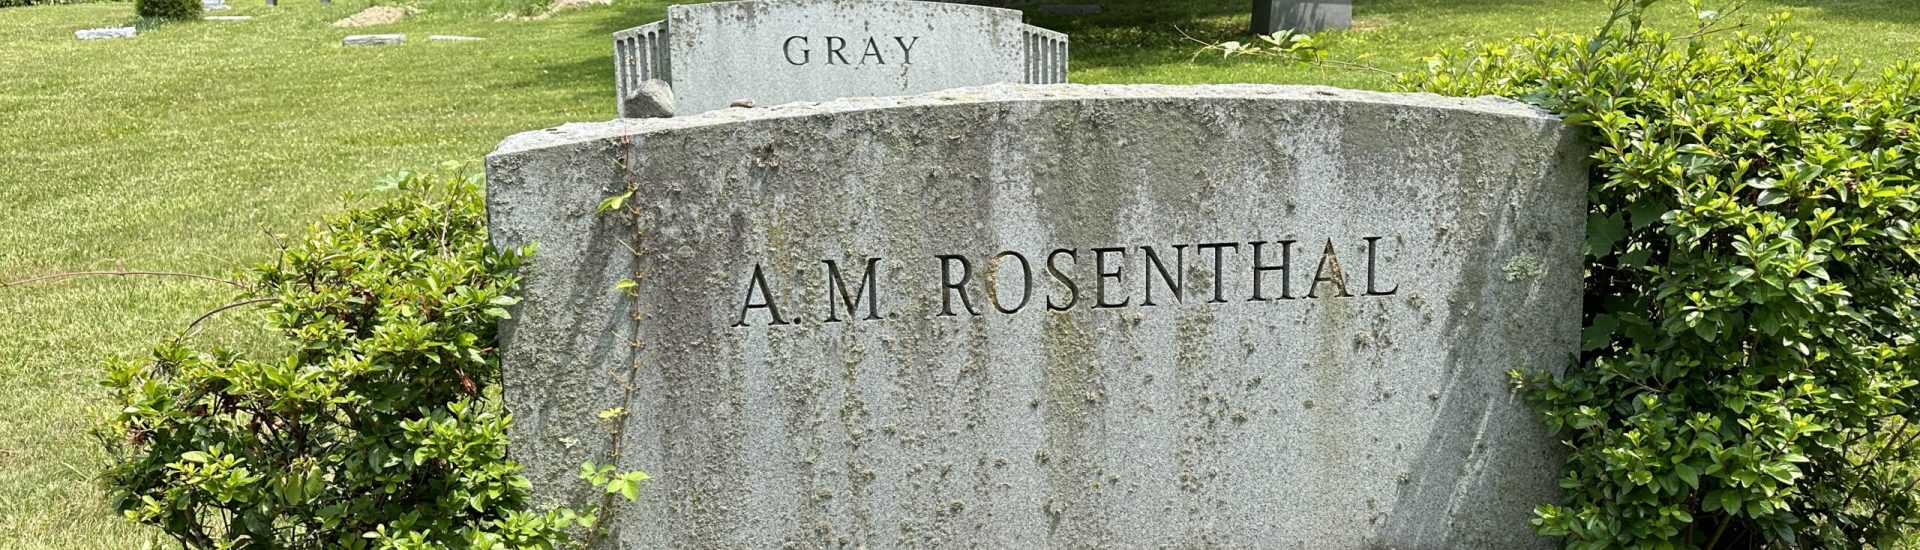 A.M. Rosenthal